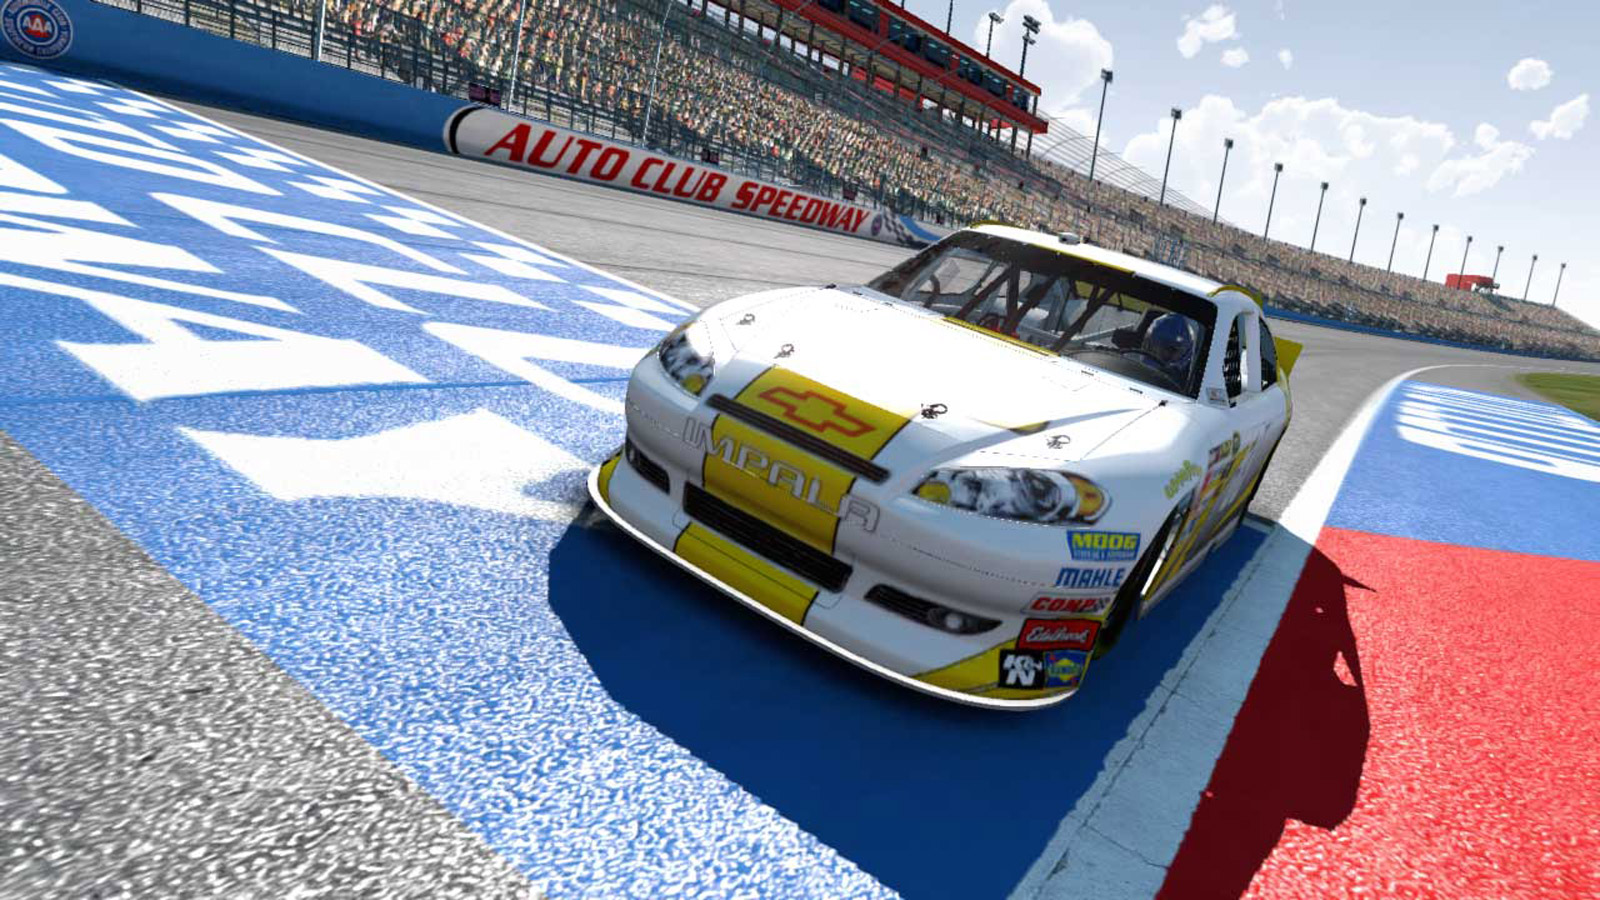 NASCAR The Game: Inside Line - PlayStation 3, PlayStation 3